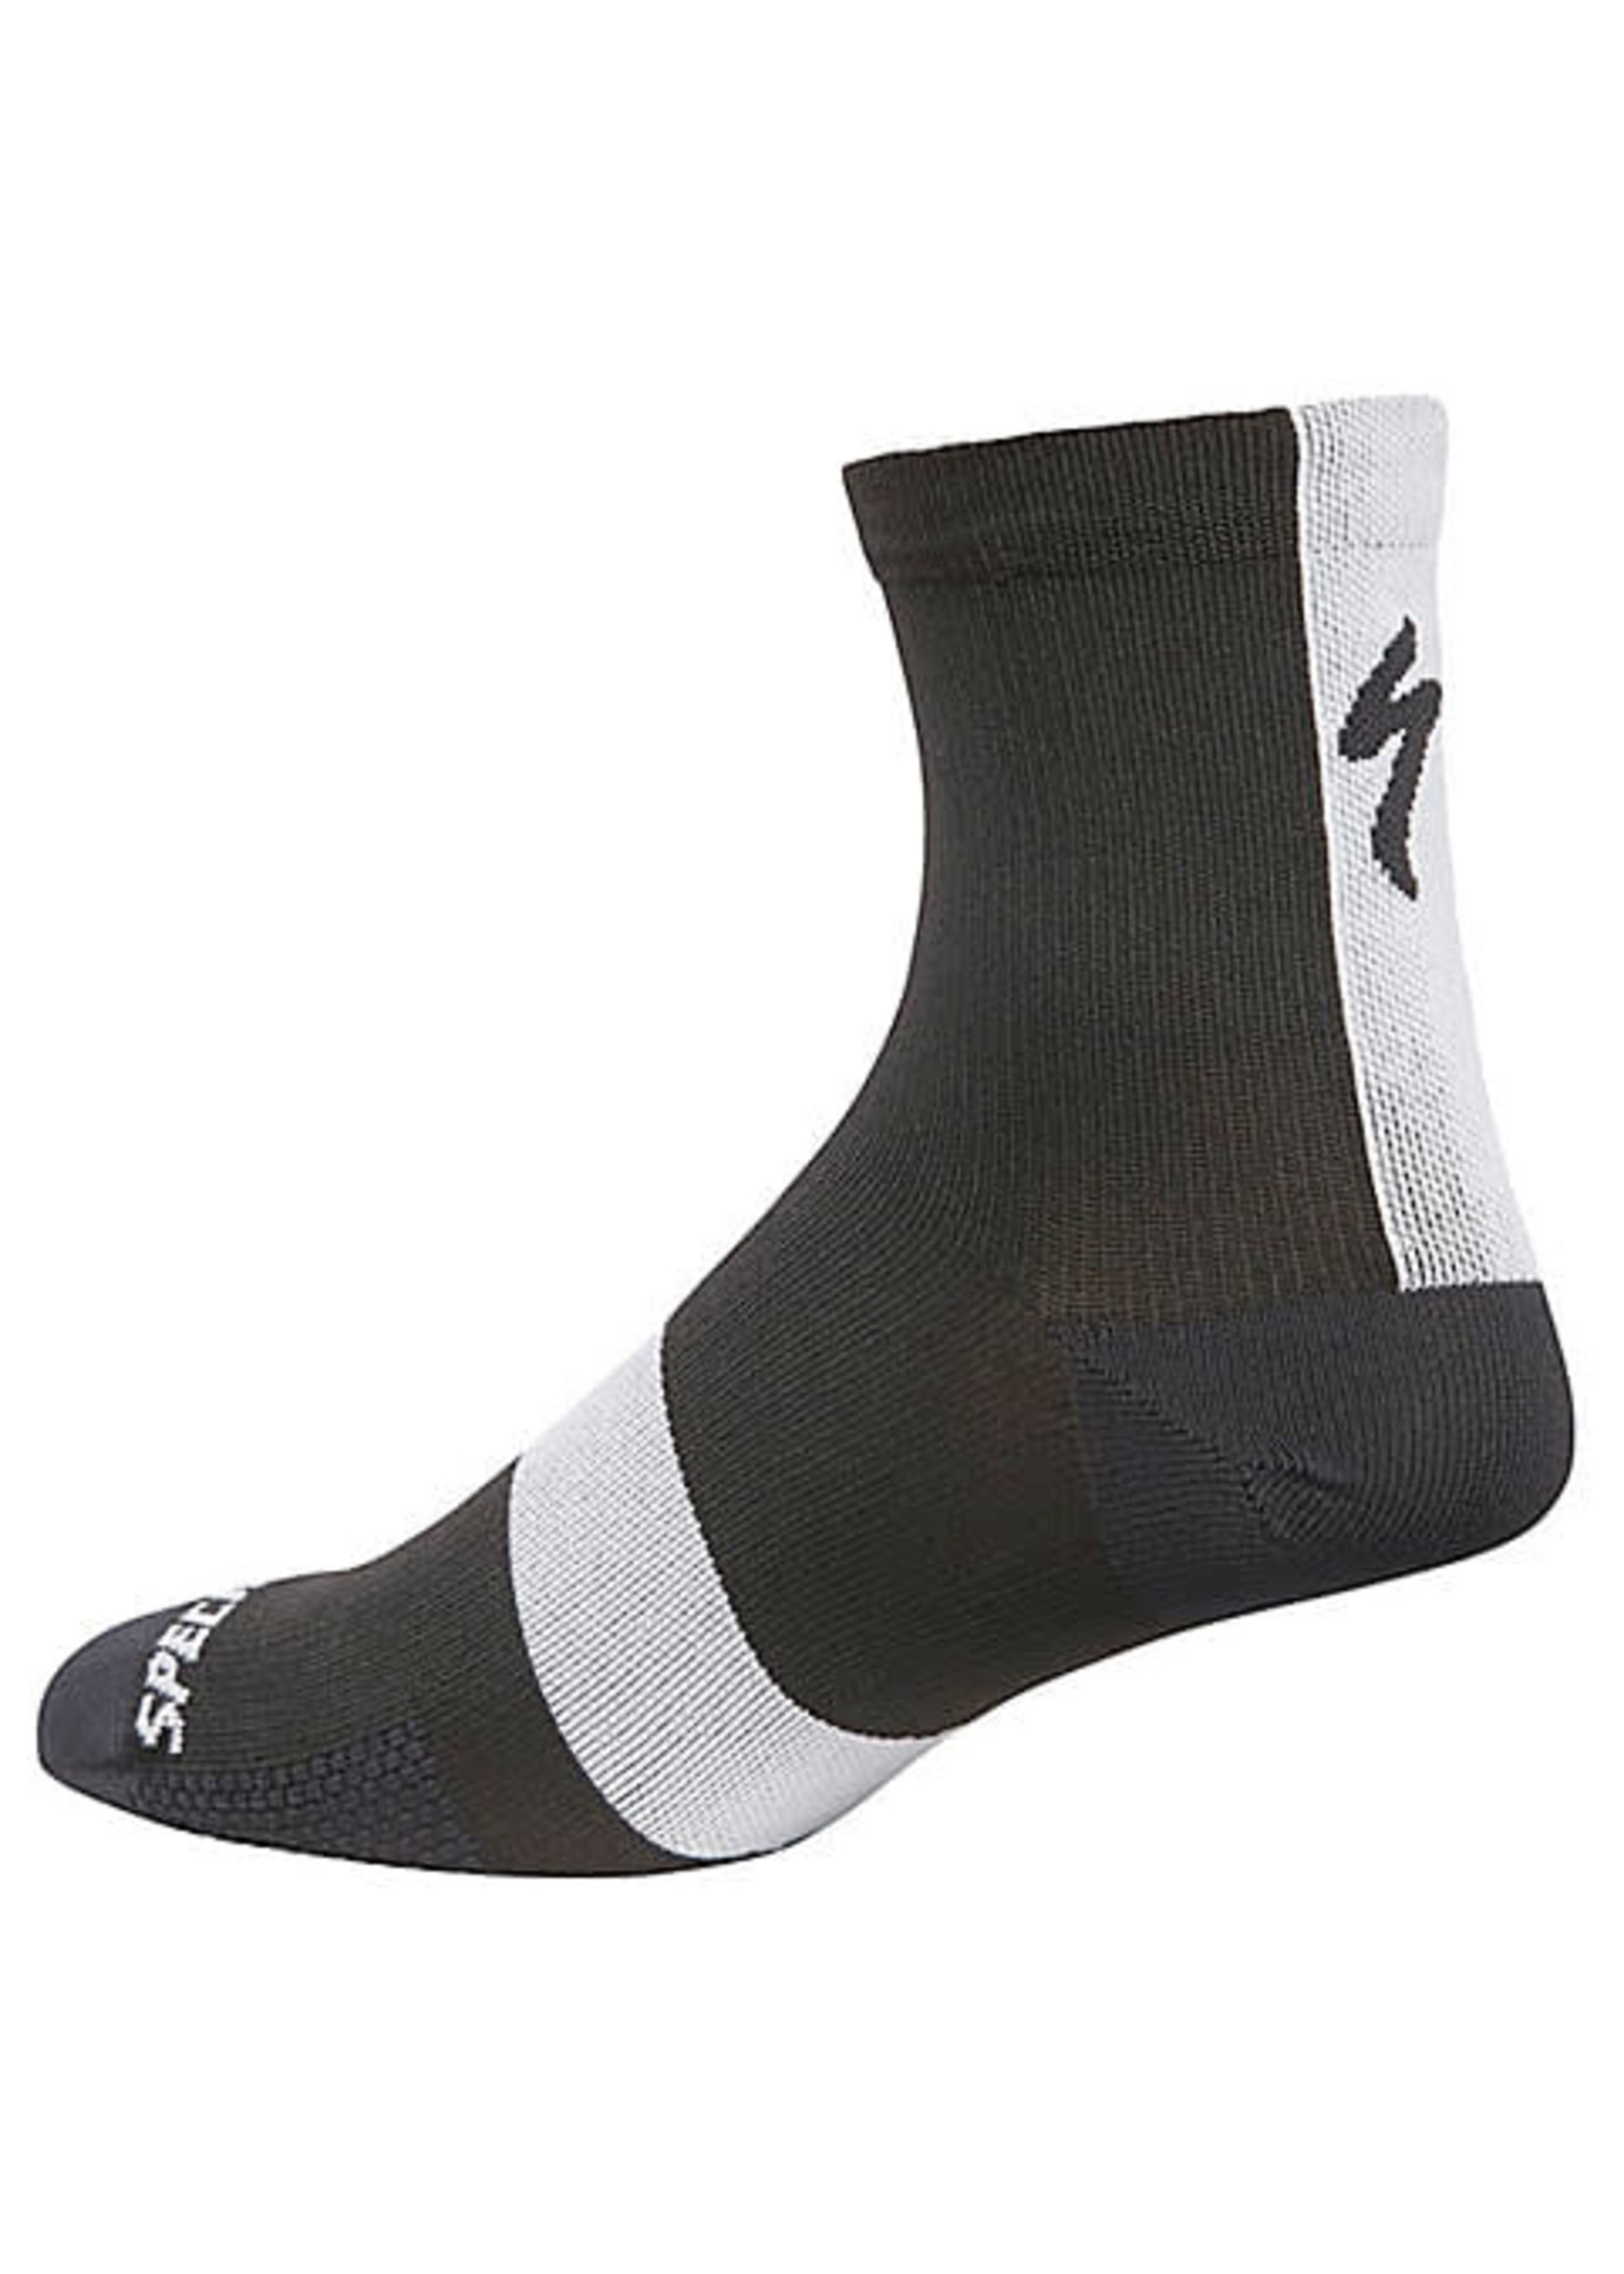 Specialized RBX Pro Mid Socks